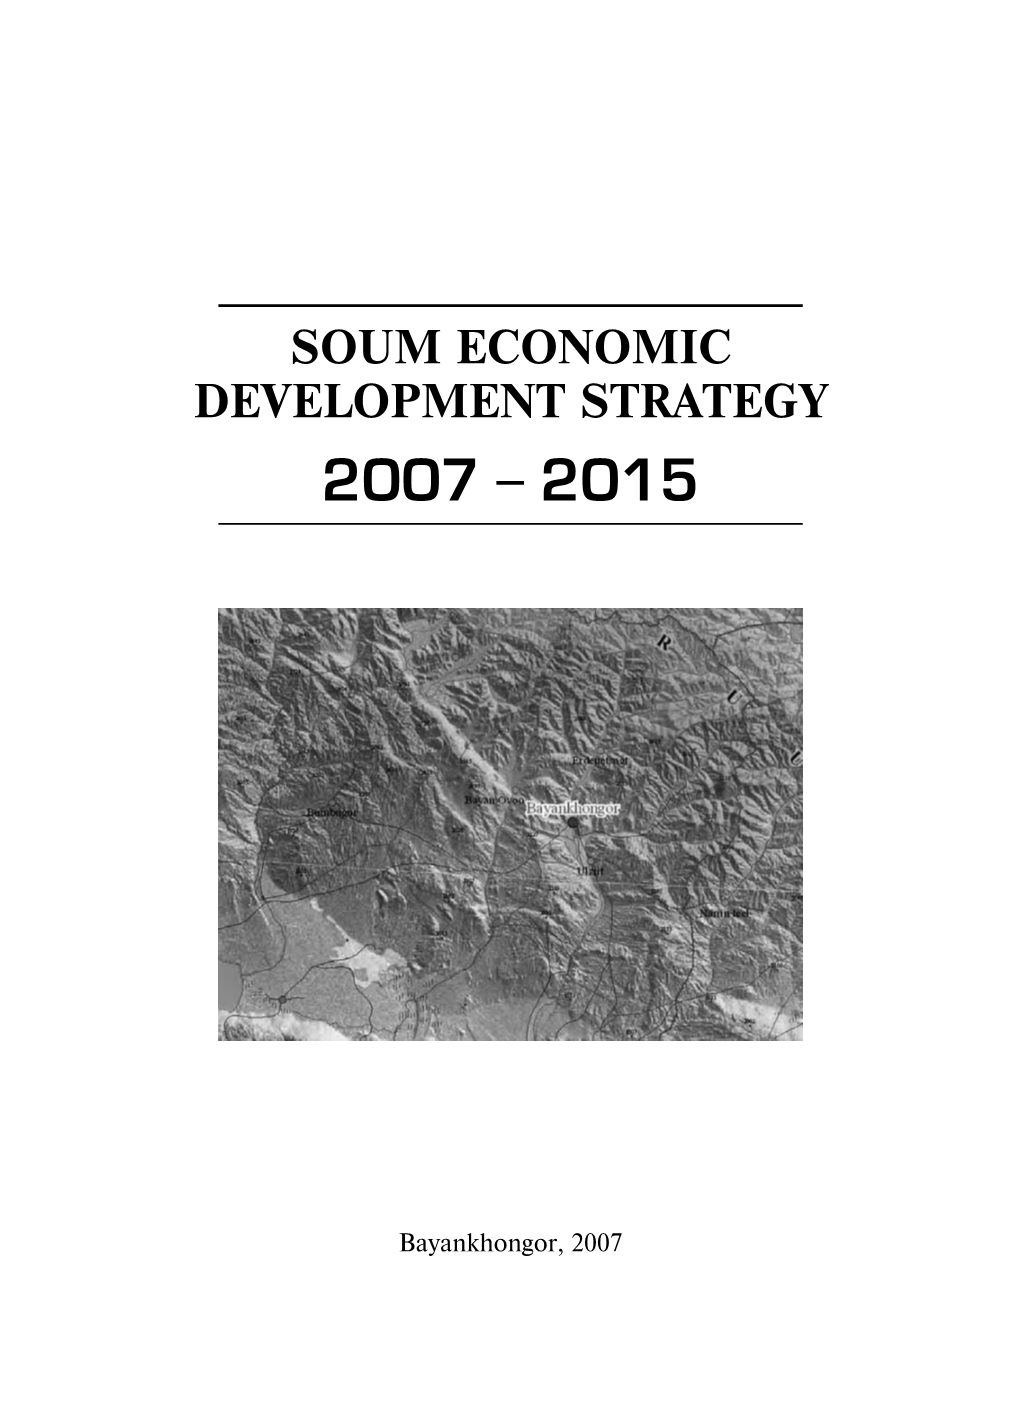 Soum Economic Development Strategy 2007 - 2015